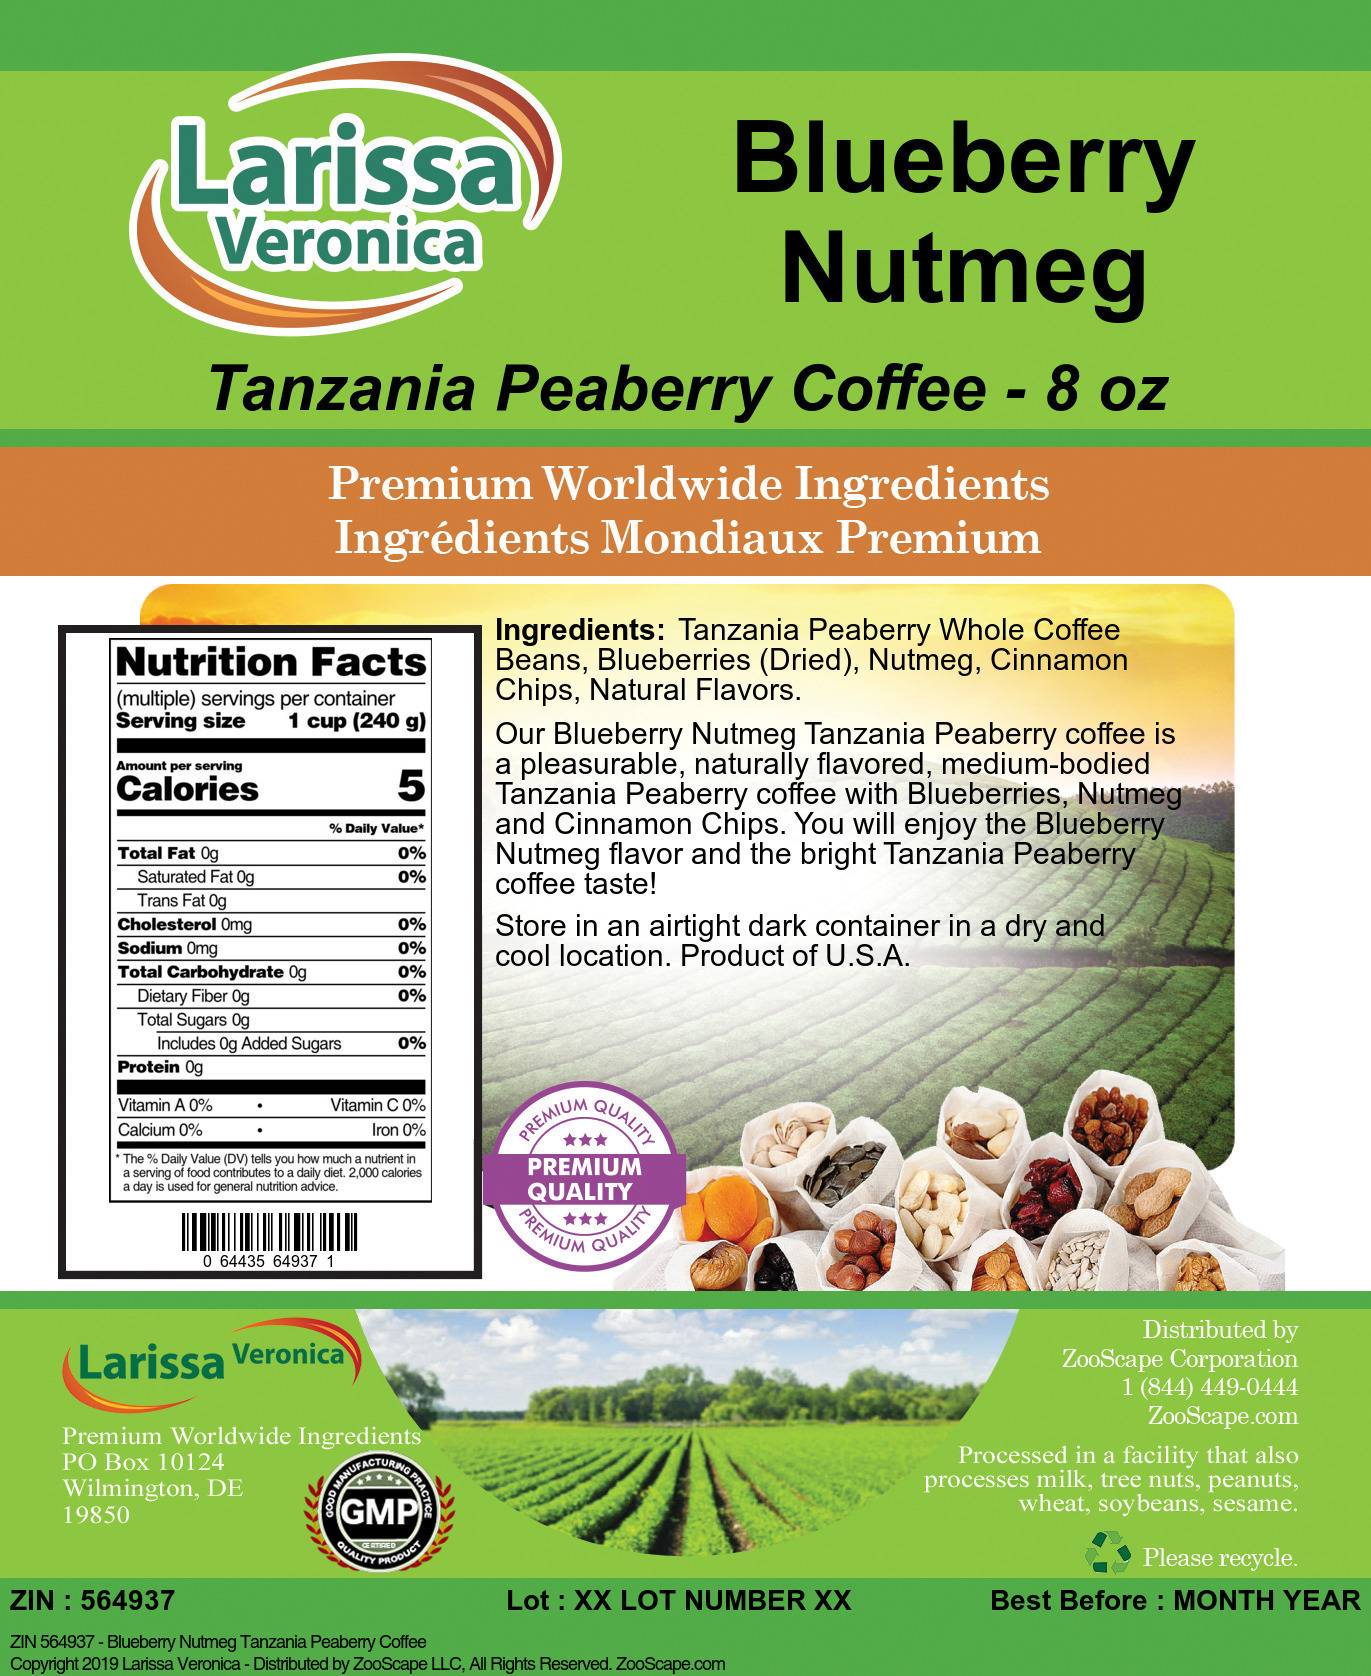 Blueberry Nutmeg Tanzania Peaberry Coffee - Label